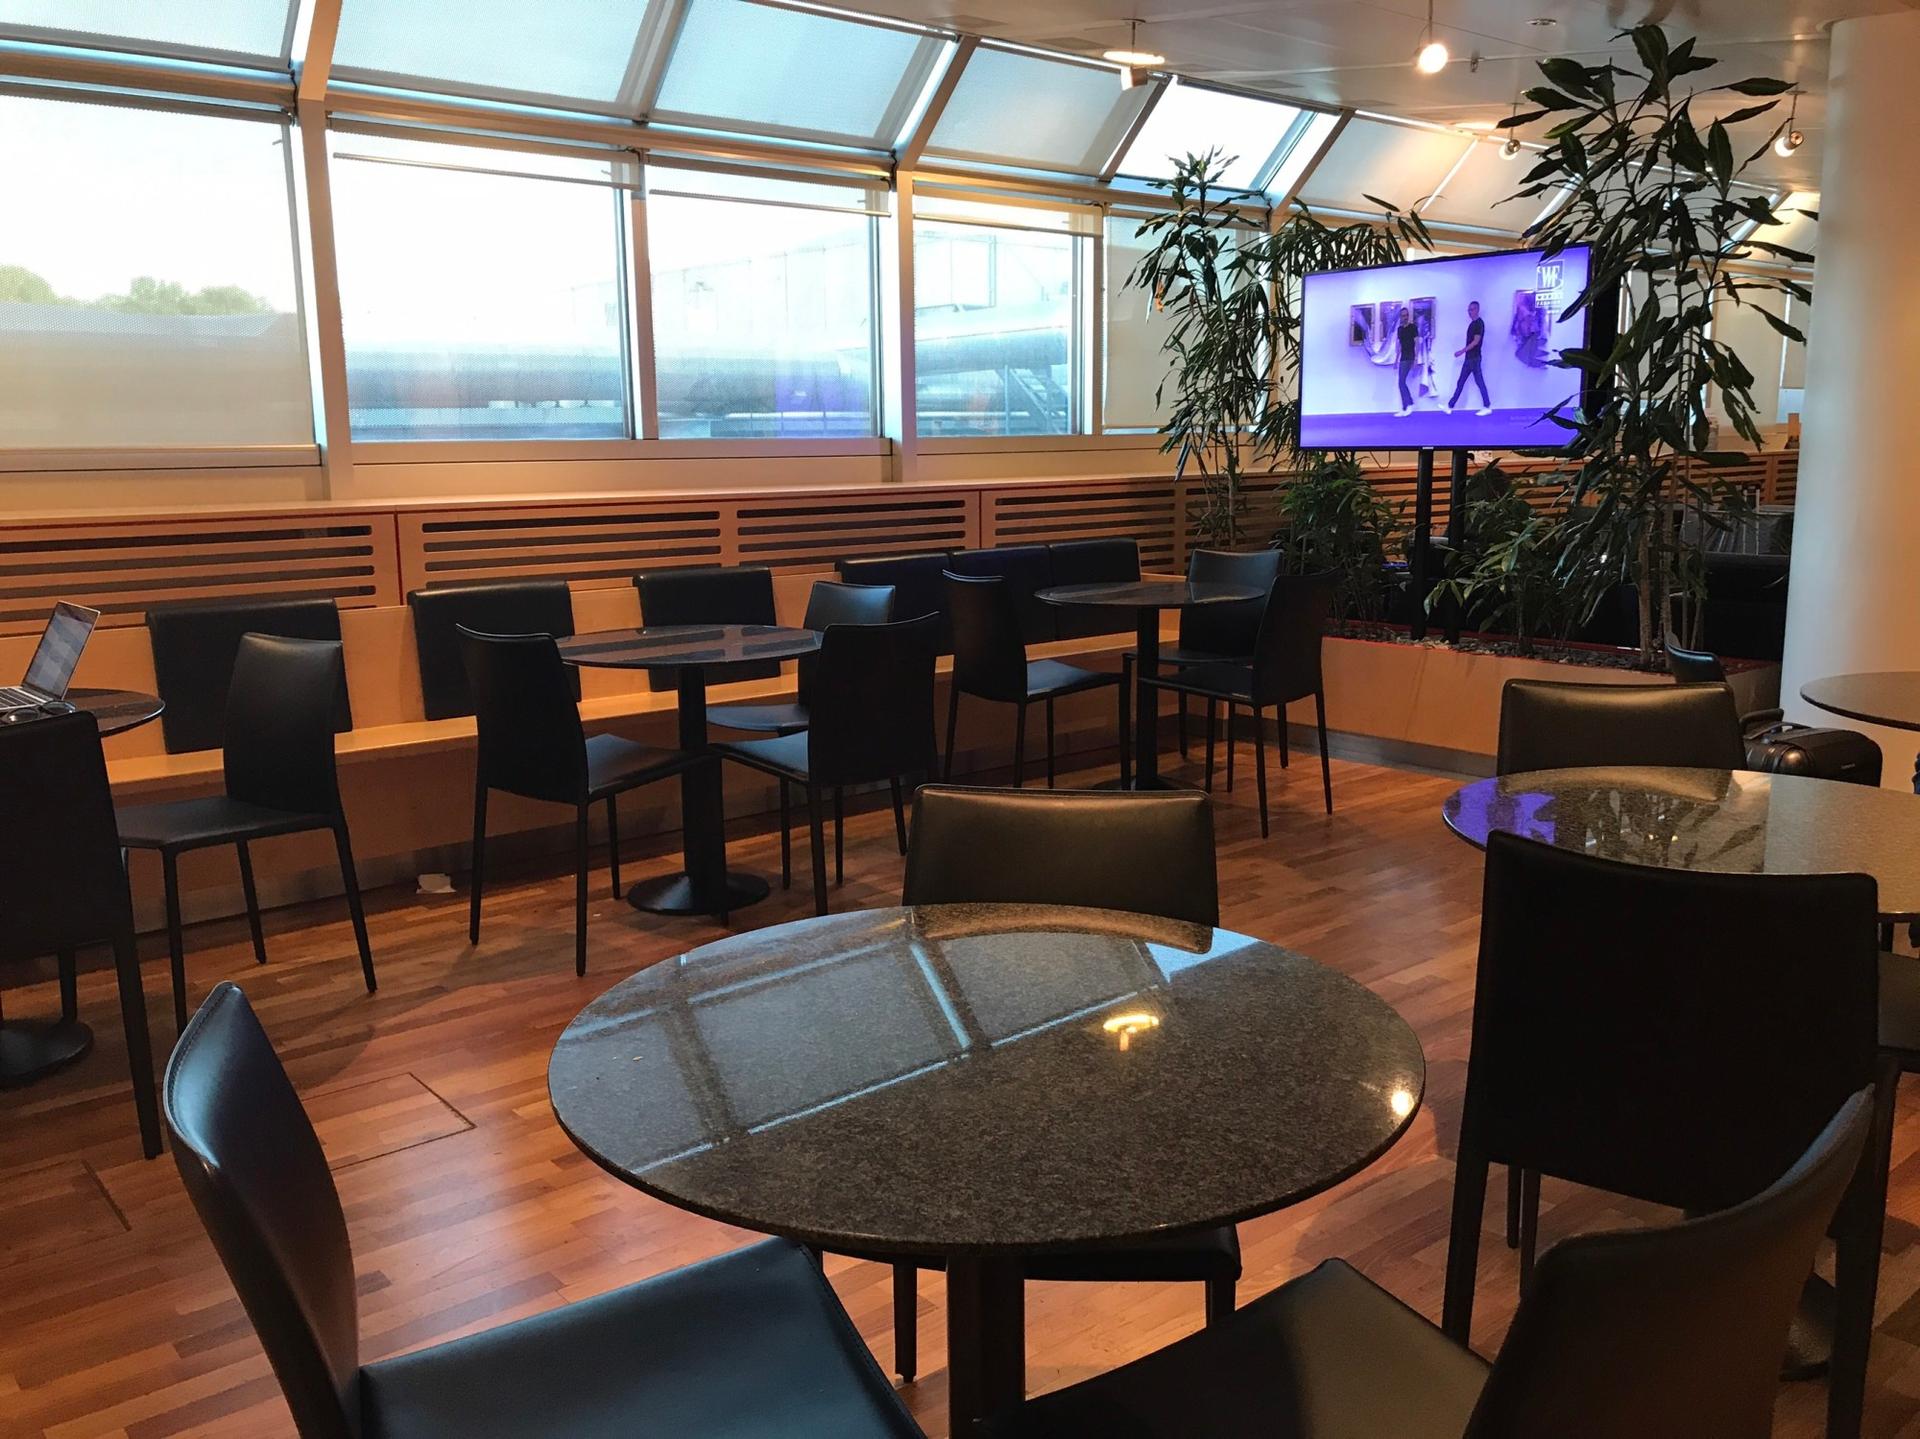 Swissport Horizon Lounge image 1 of 22